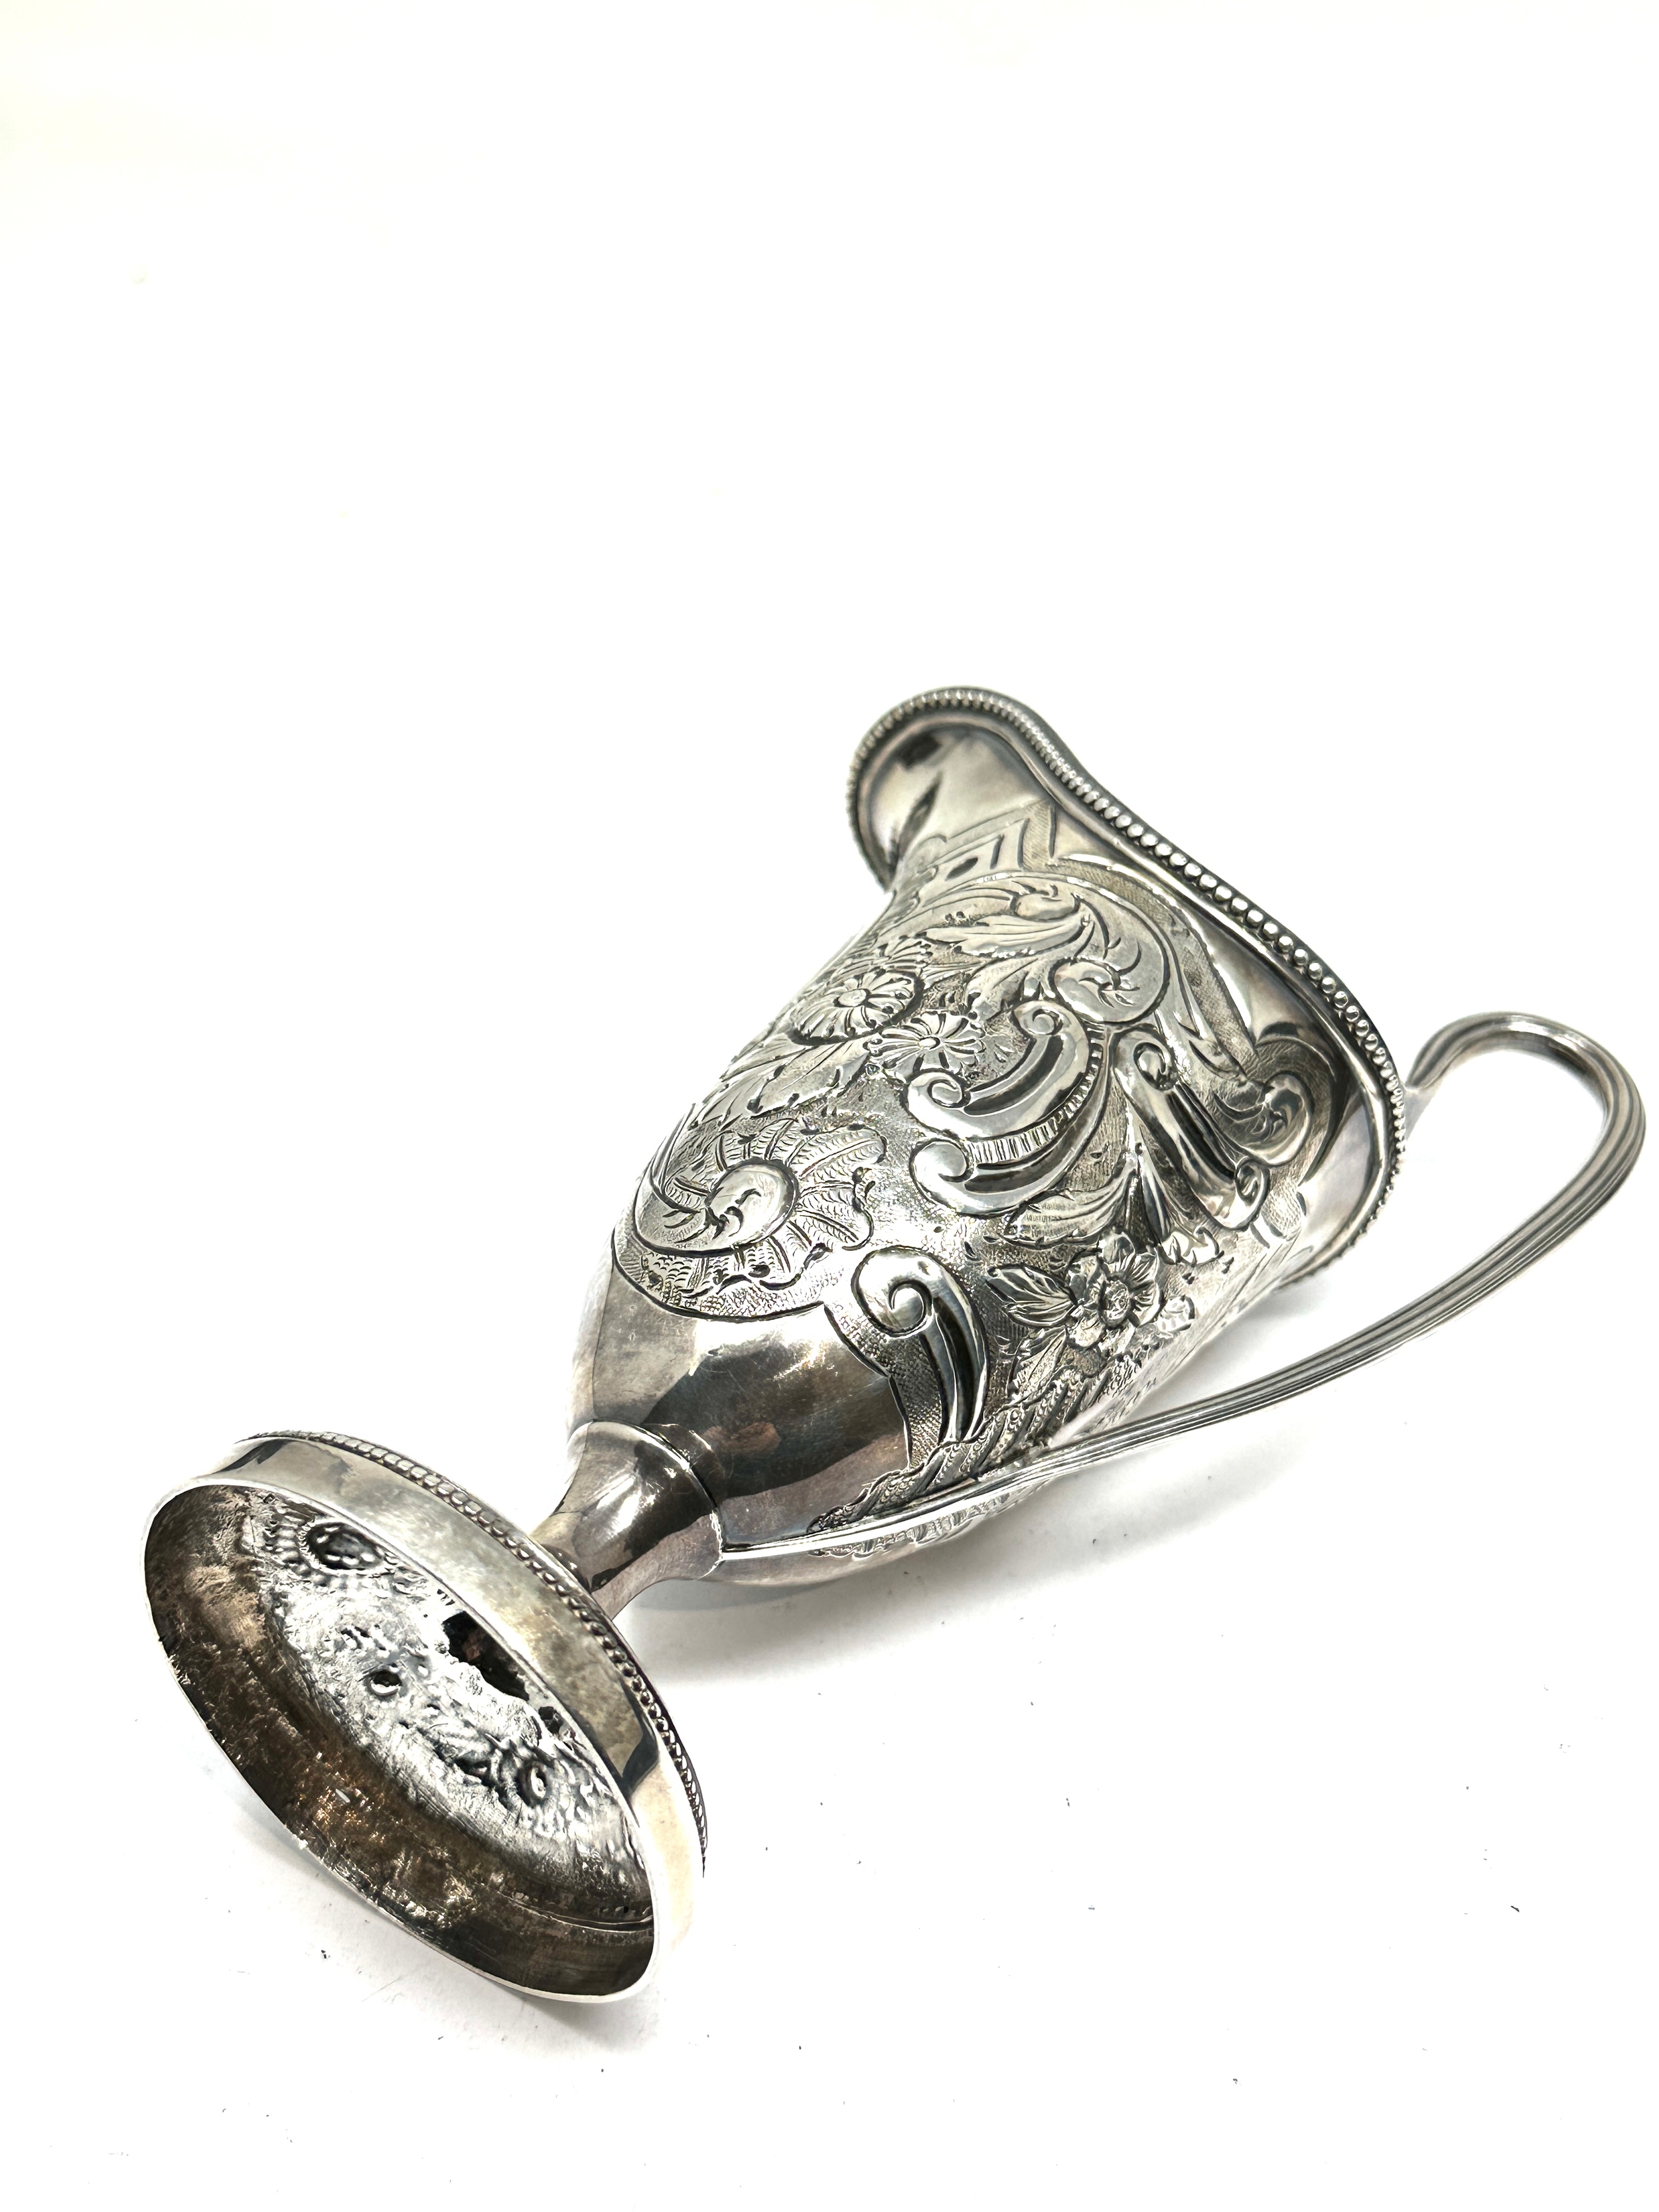 fine heavy georgian silver cream jug london silver hallmarks weight approx 200g - Image 6 of 6